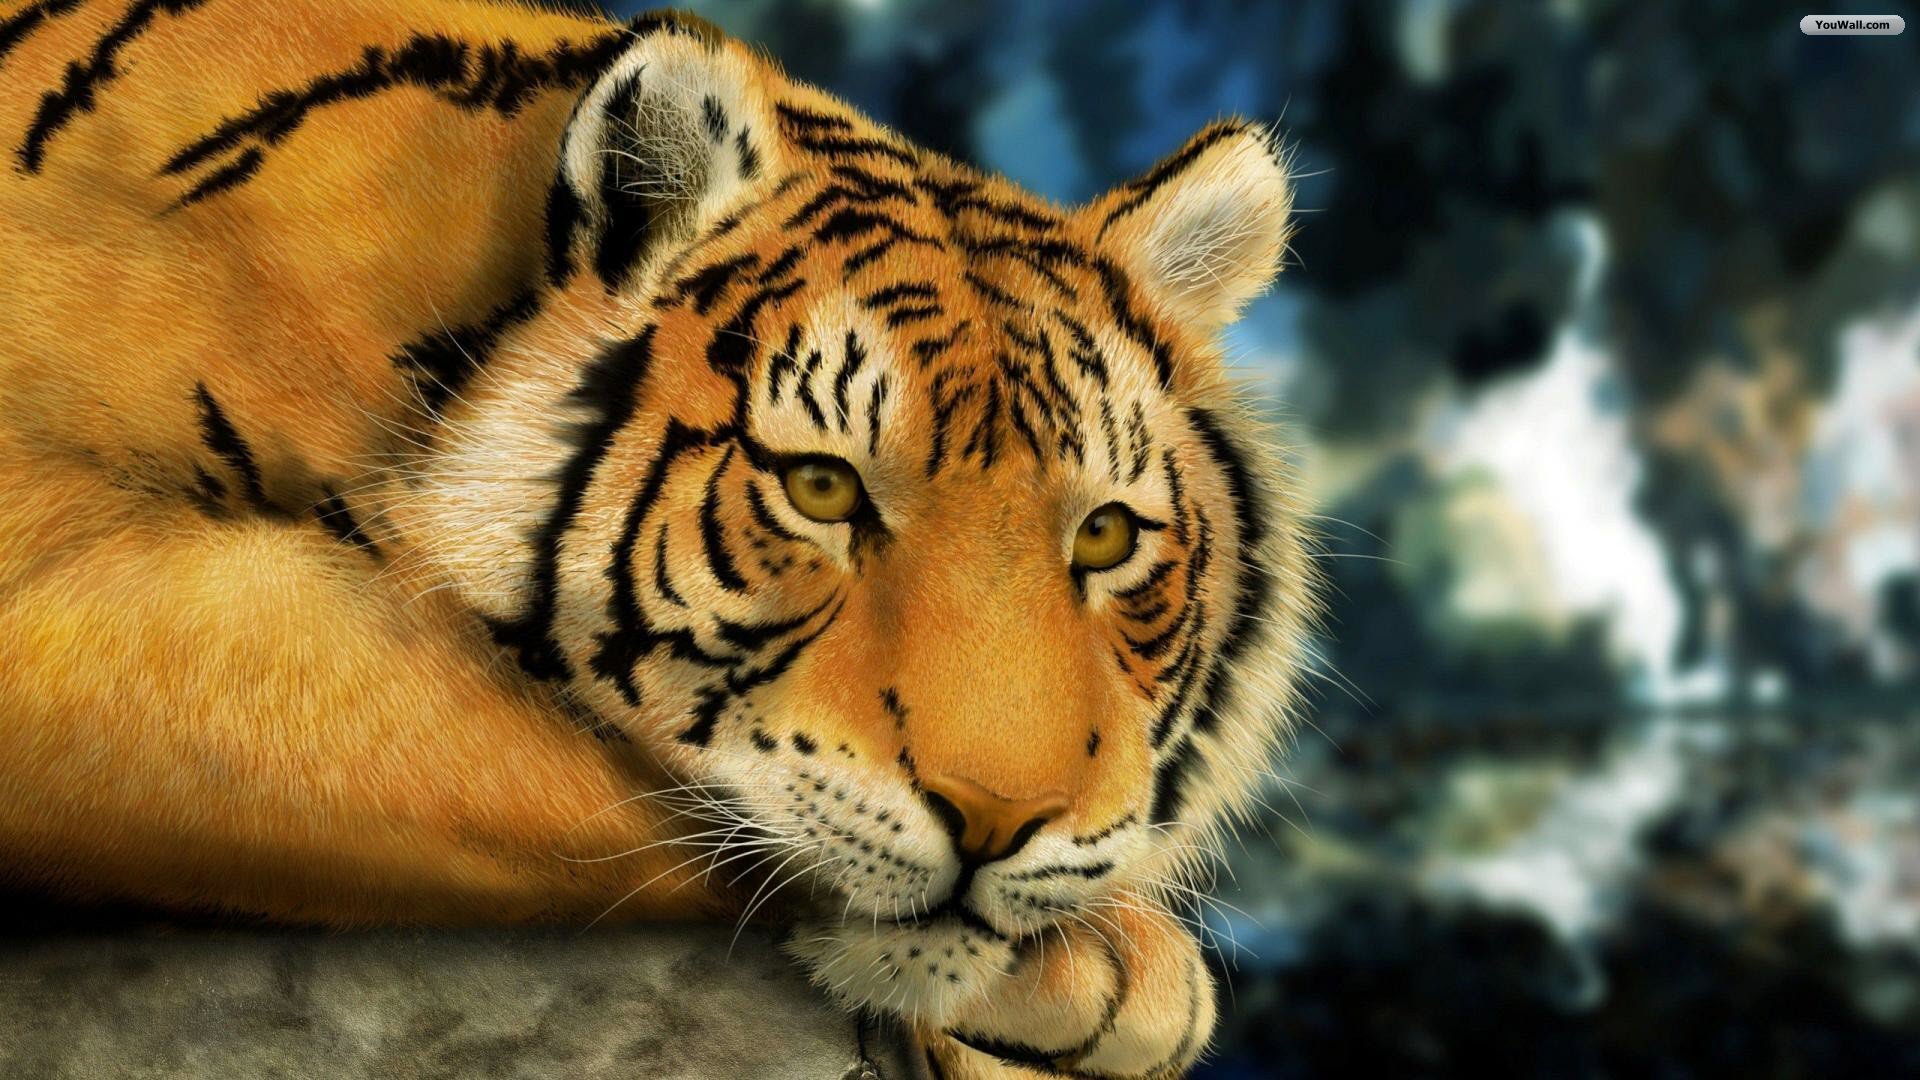 Tiger Wallpaper 3d Desktop Background  Tiger images Big cats art Tiger  pictures